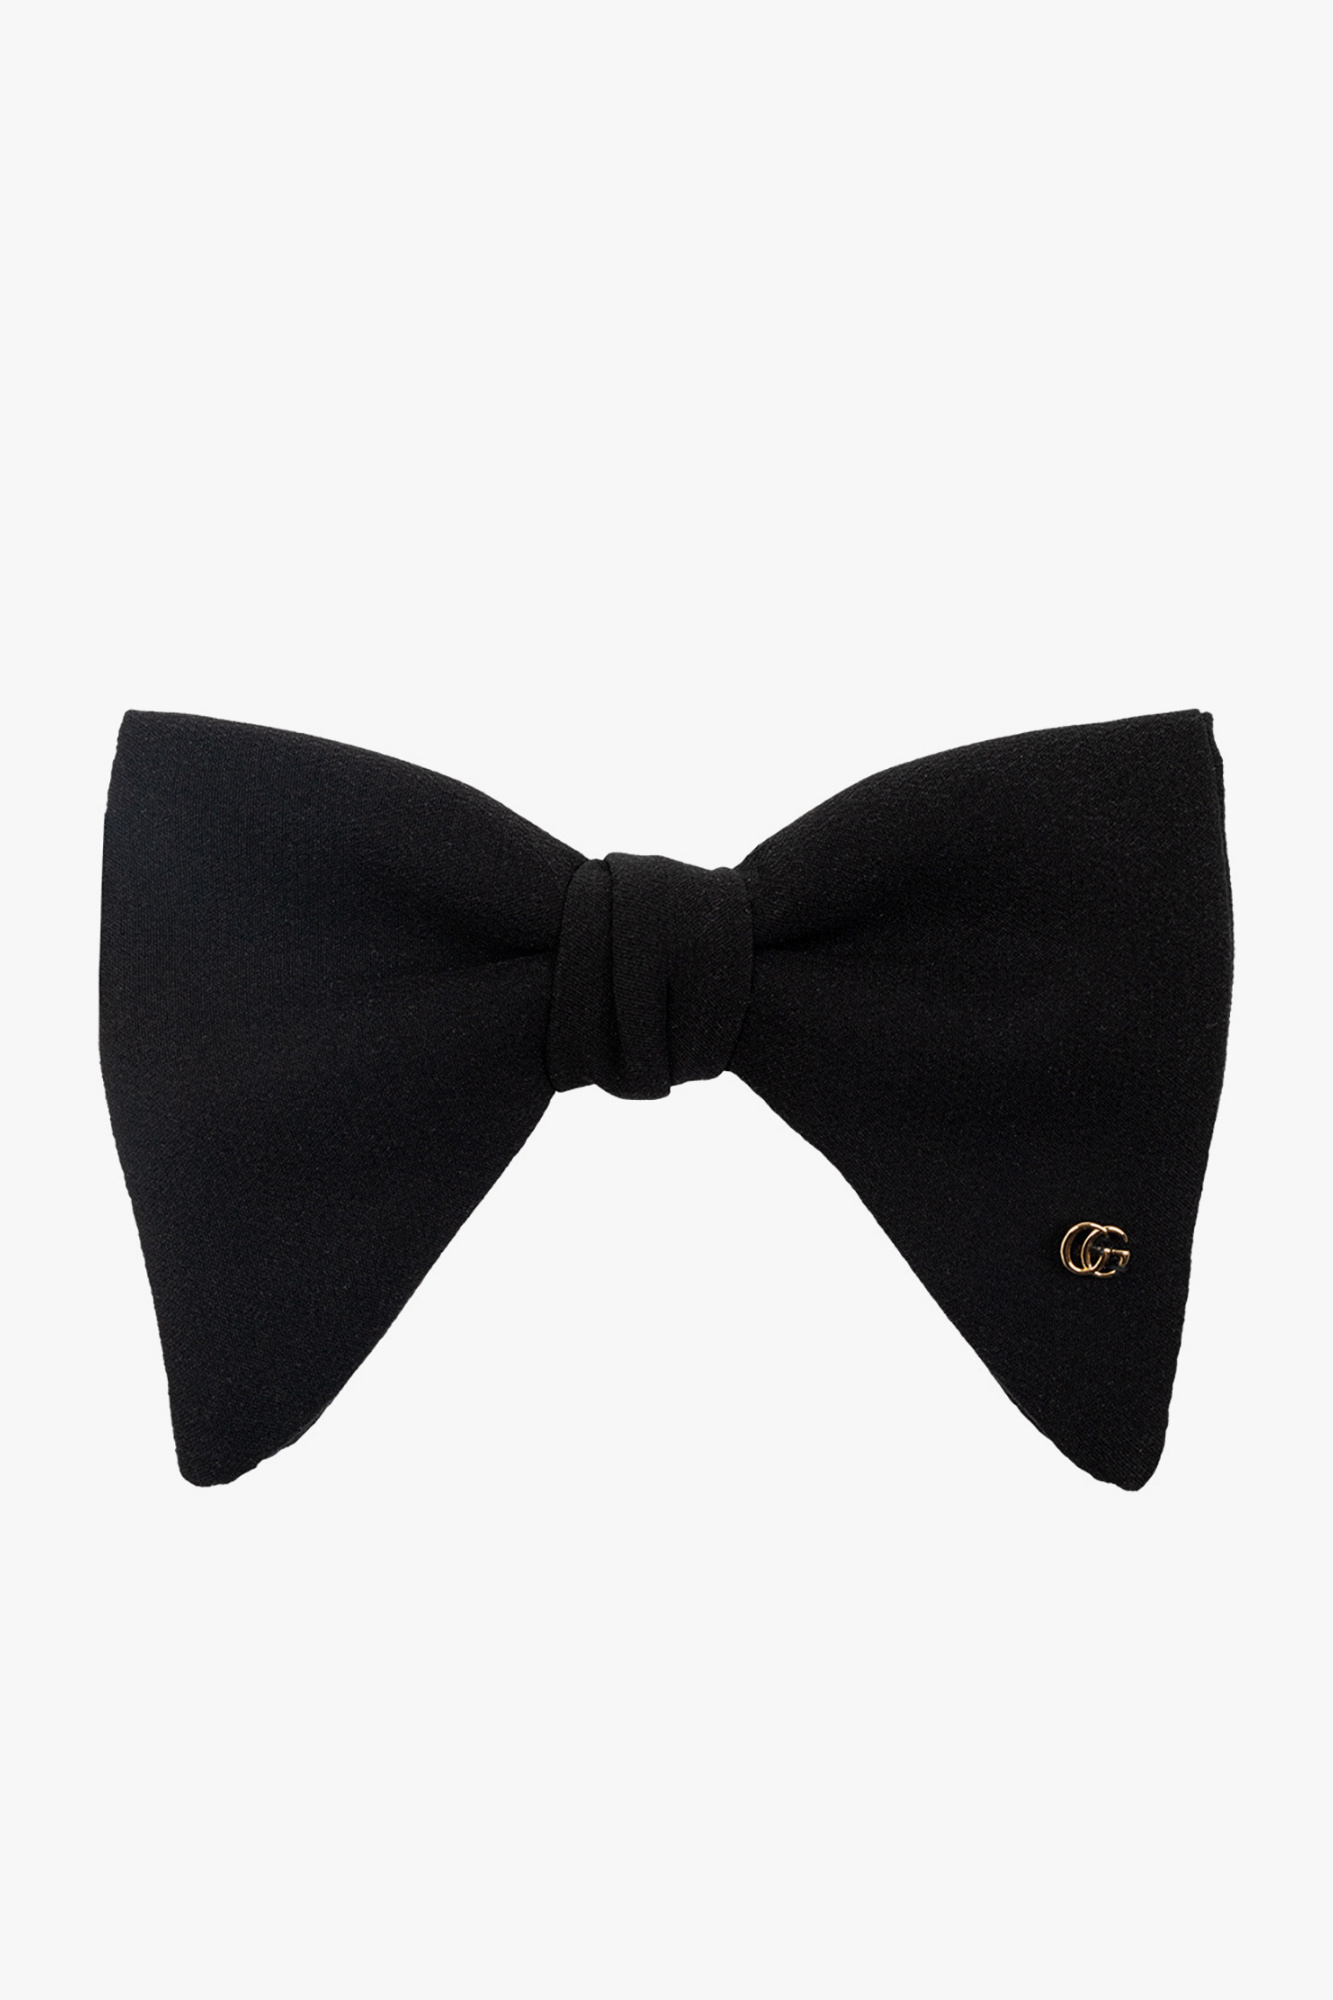 GG-plaque silk bow tie